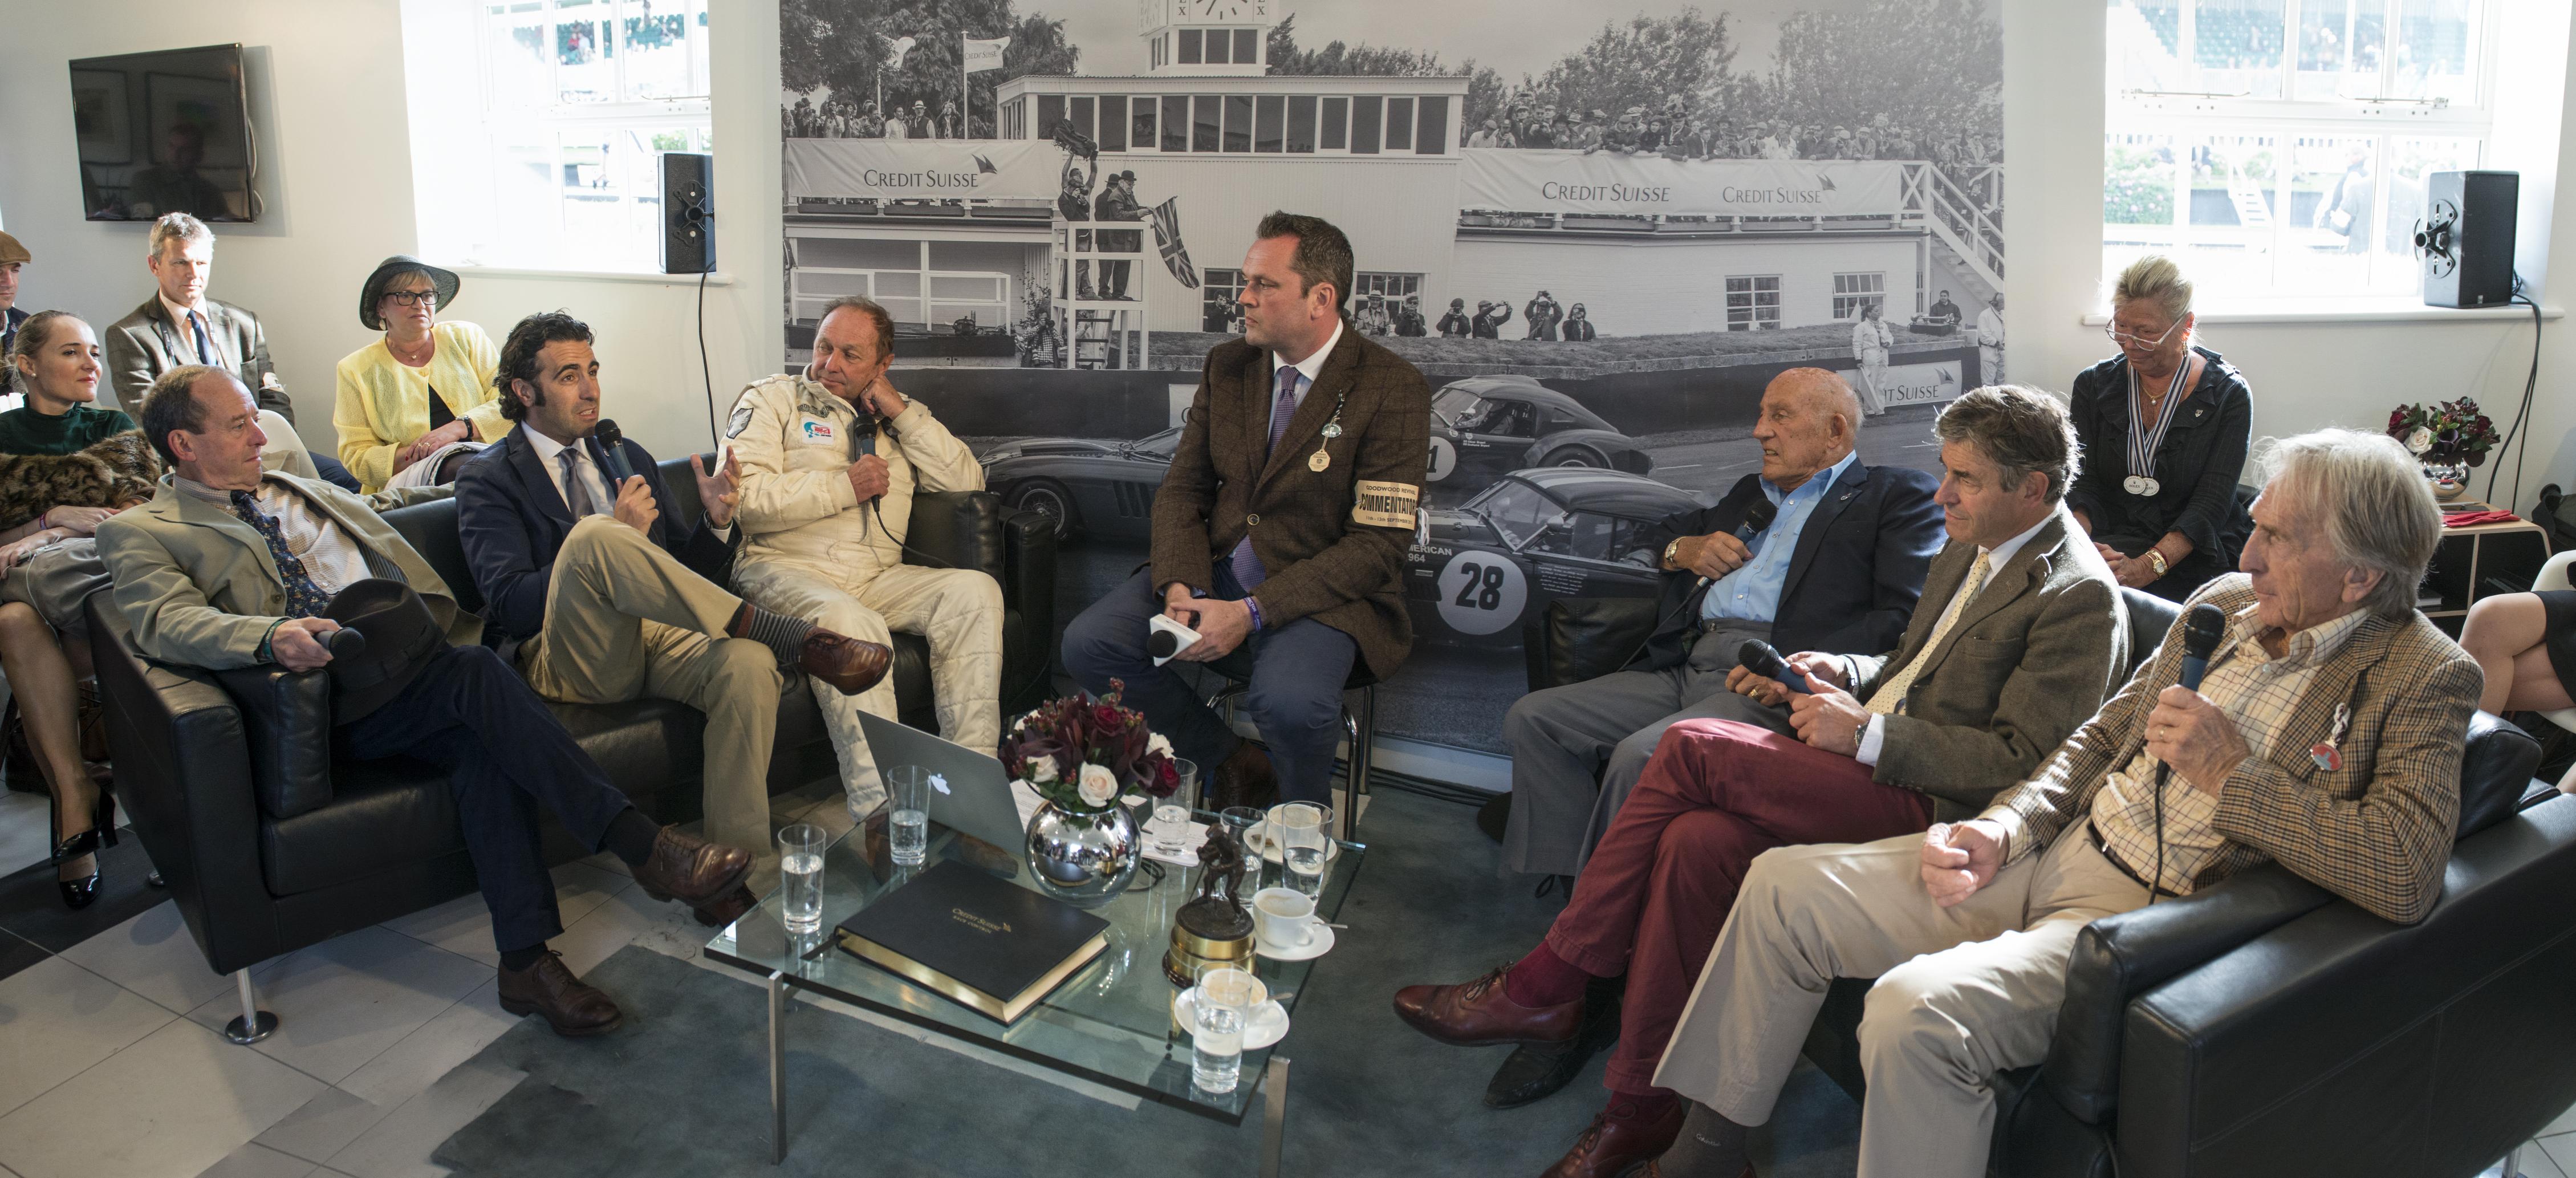 Credit Suisse releases ‘Historic Racing Culture’ forum